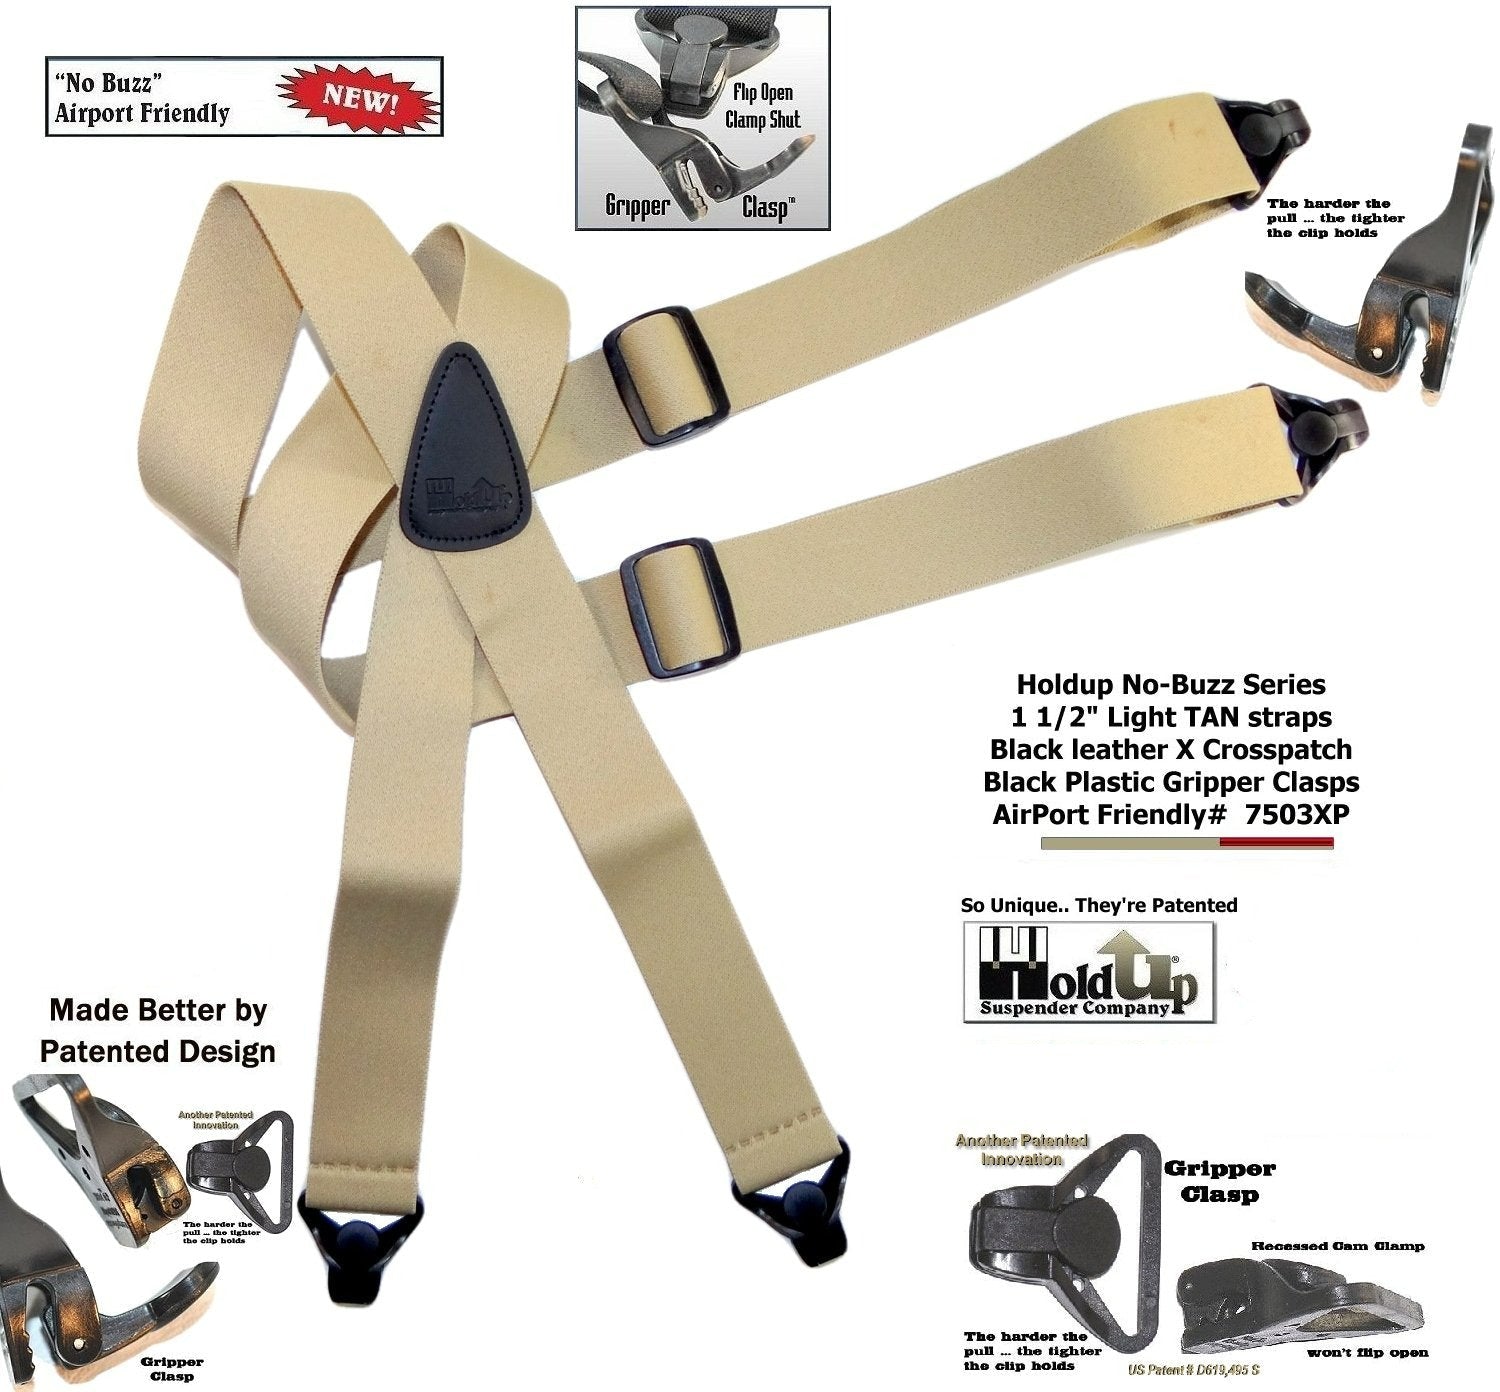 Holdup Contractor Series SunTan beige Wide Work X-Back Style Suspenders –  Holdup-Suspender-Company